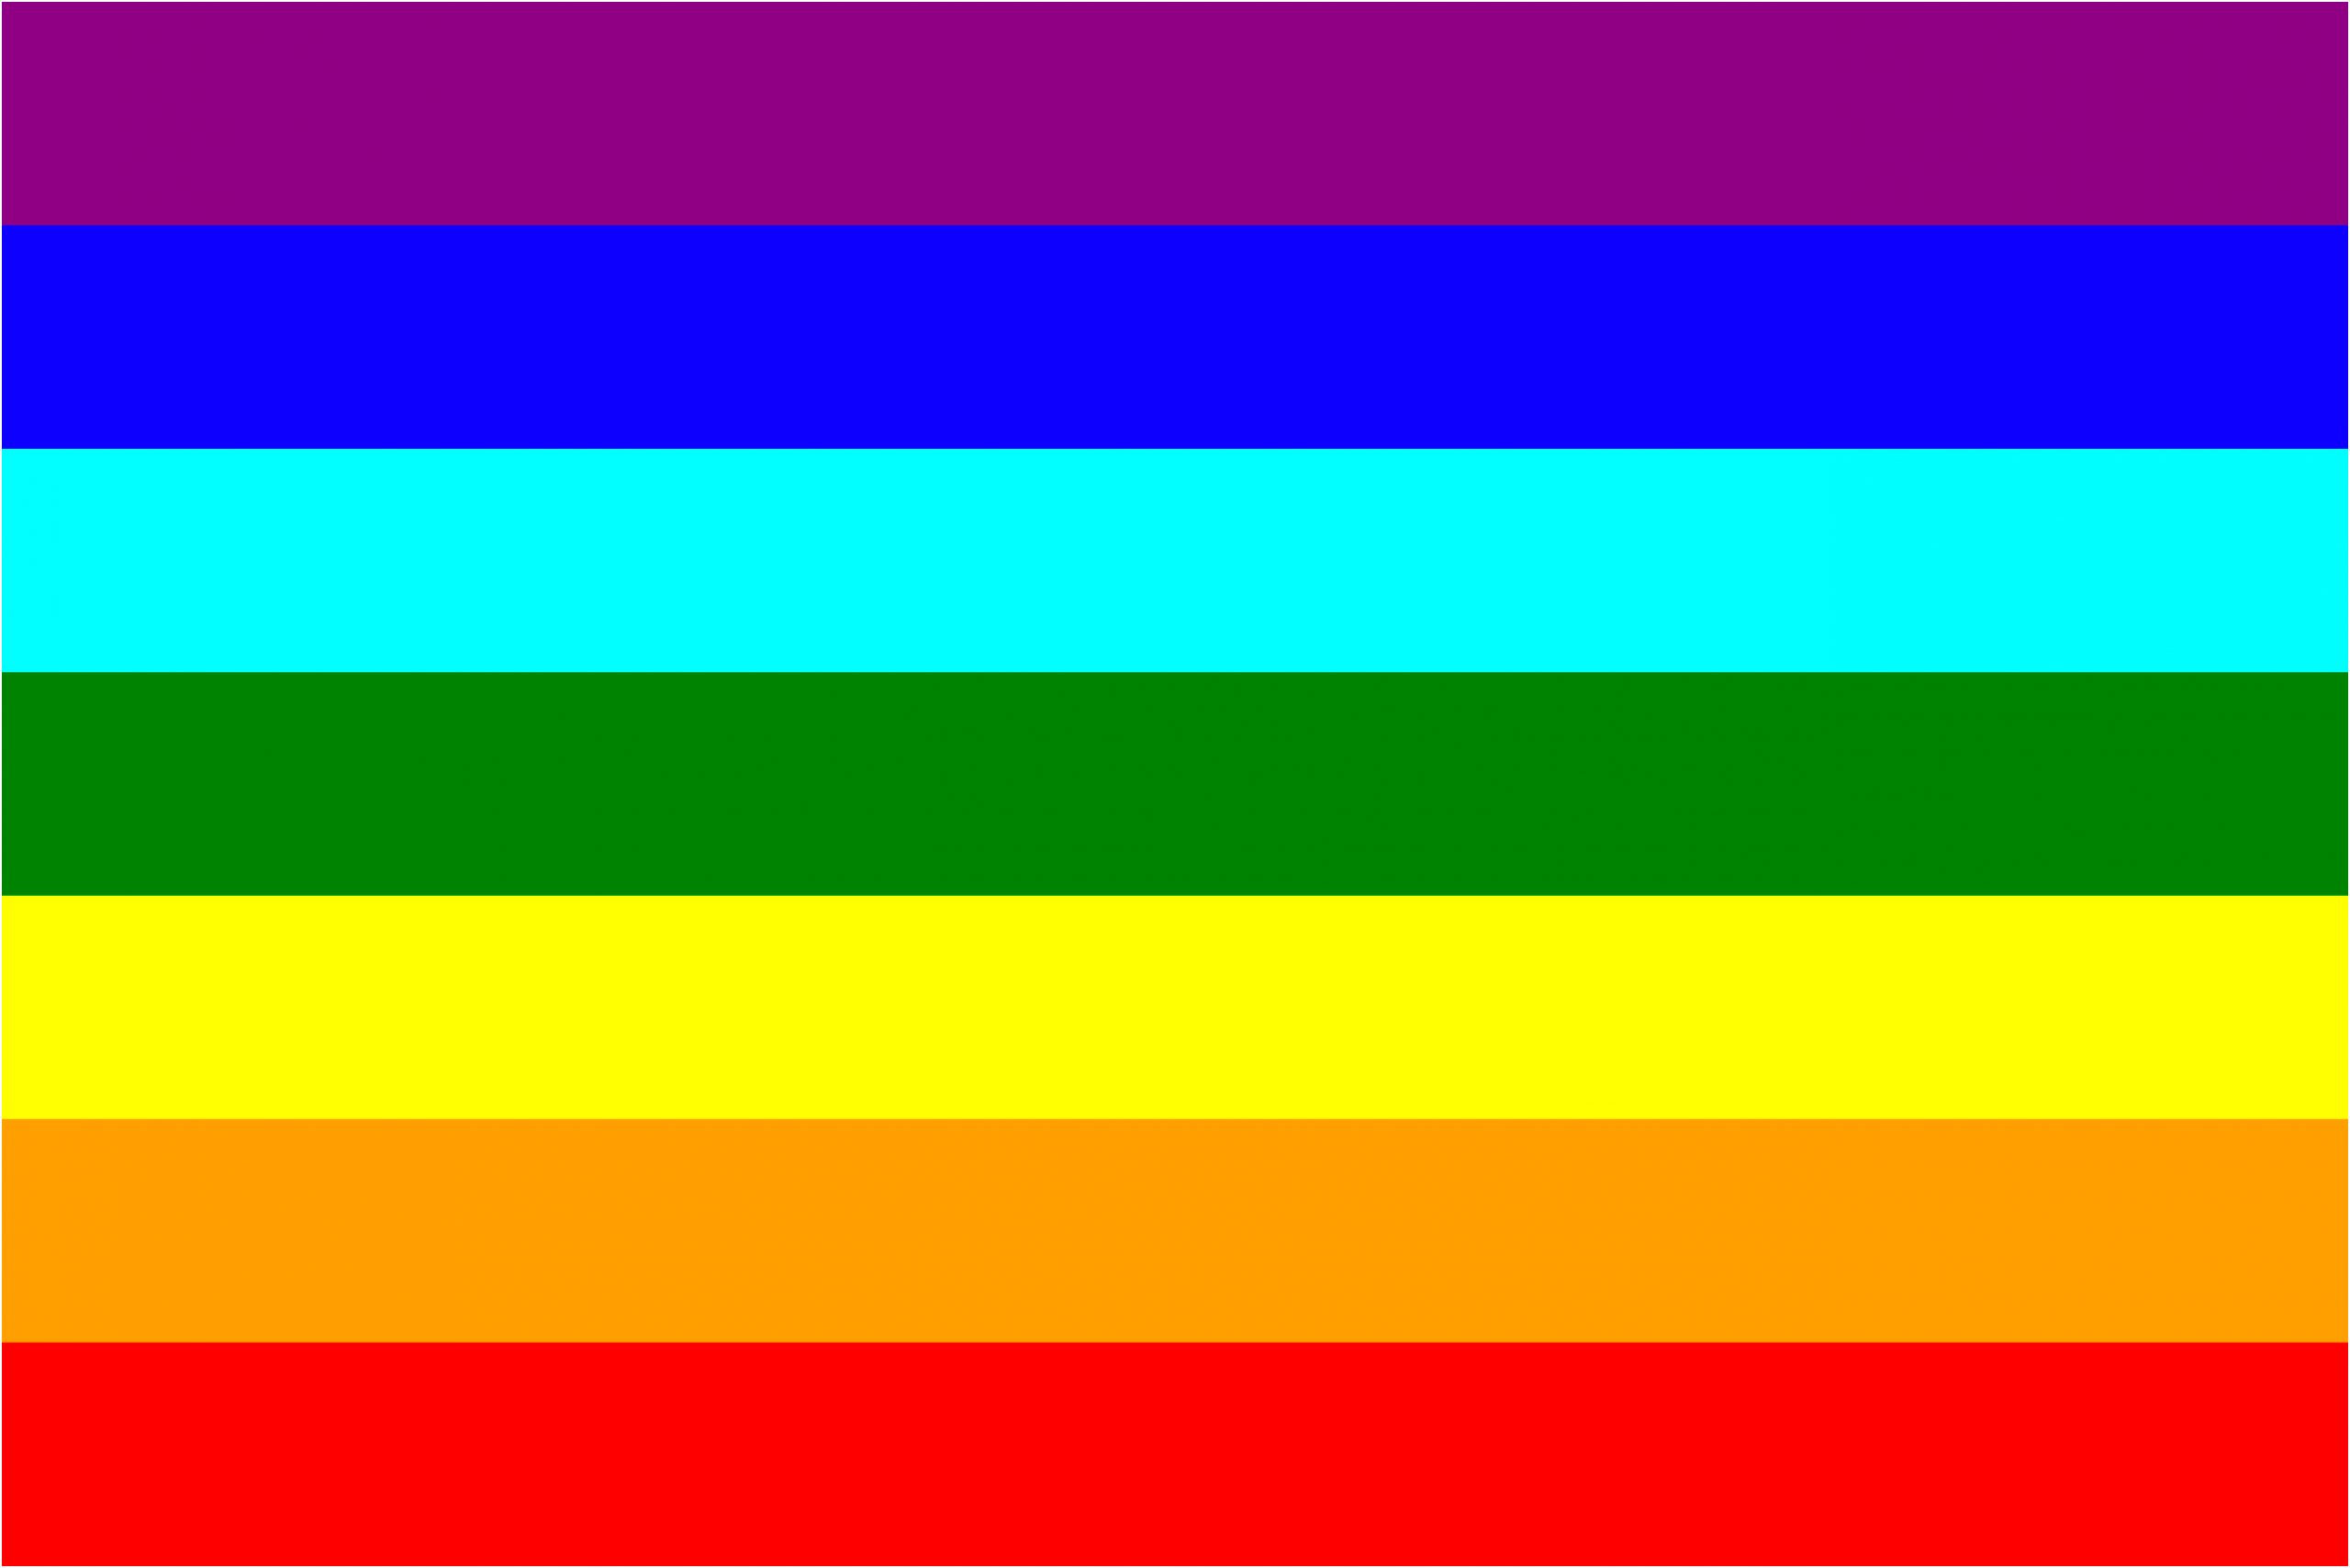 Картинки цвета по цветам. Флаг ЛГБТ 7 цветов. Радуга флаг не ЛГБТ. Флаг радуги 7 цветов. Цвета радуги по цветам.